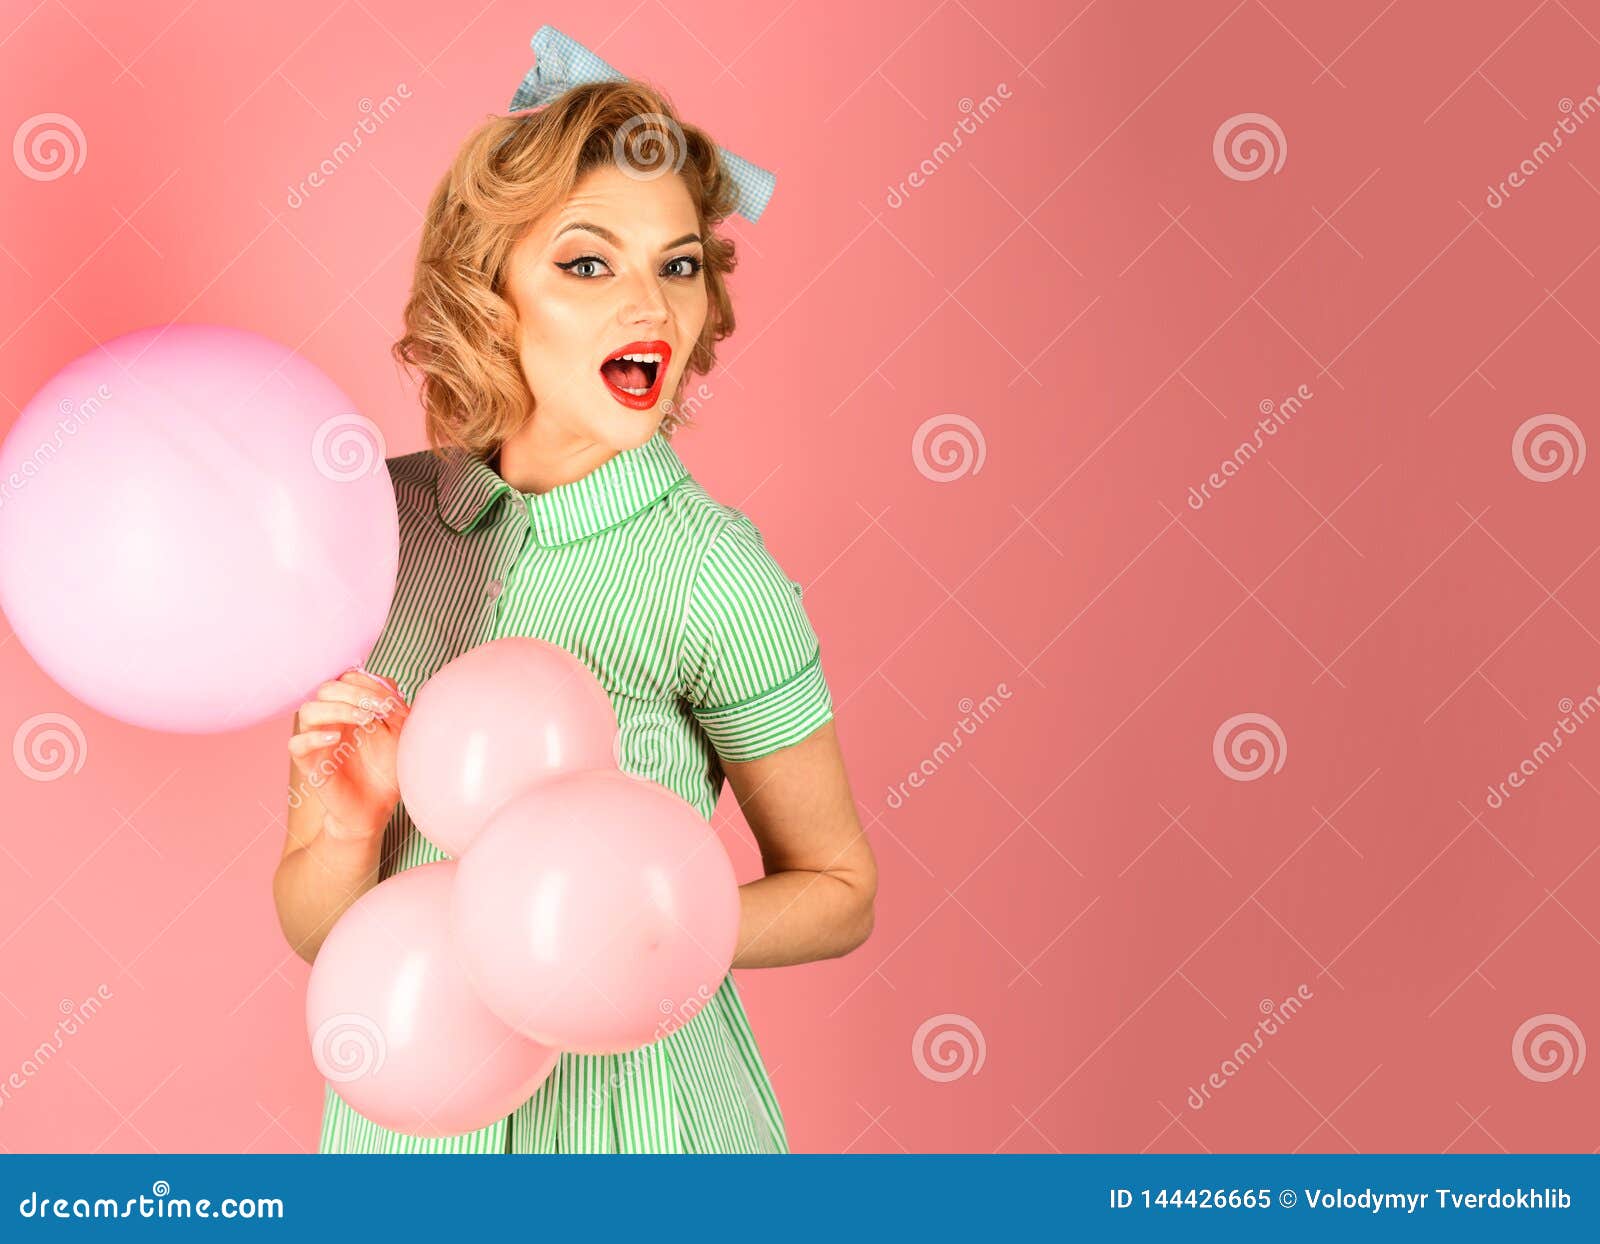 Birthday Vintage Pinup Celebration Stock Image Image Of Colorful Happy